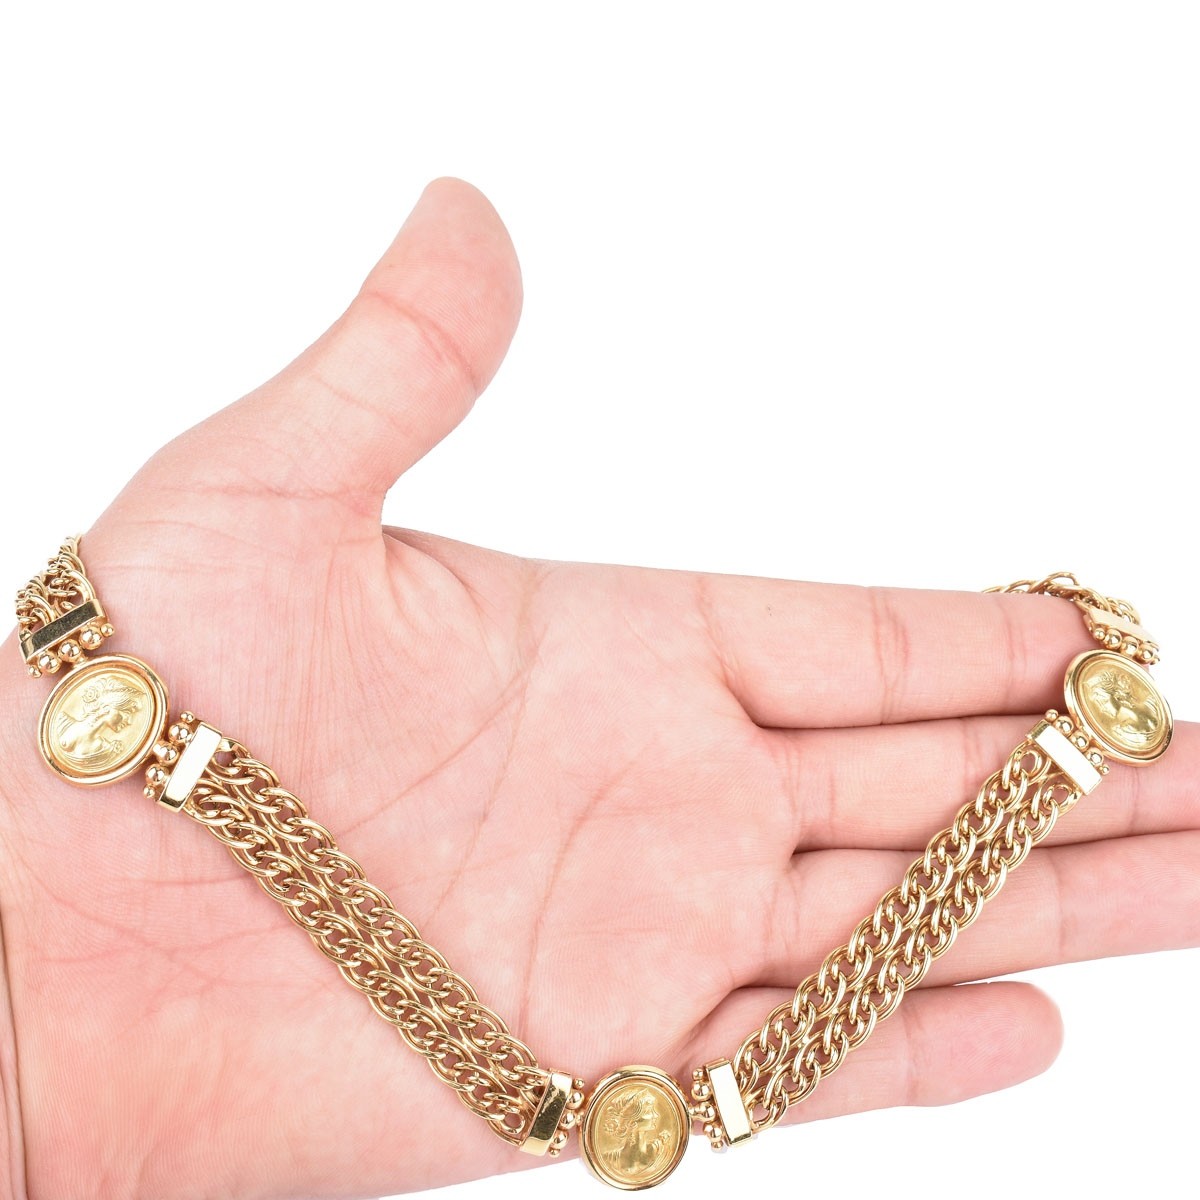 Vintage Italian 18K Gold Necklace - Image 4 of 4